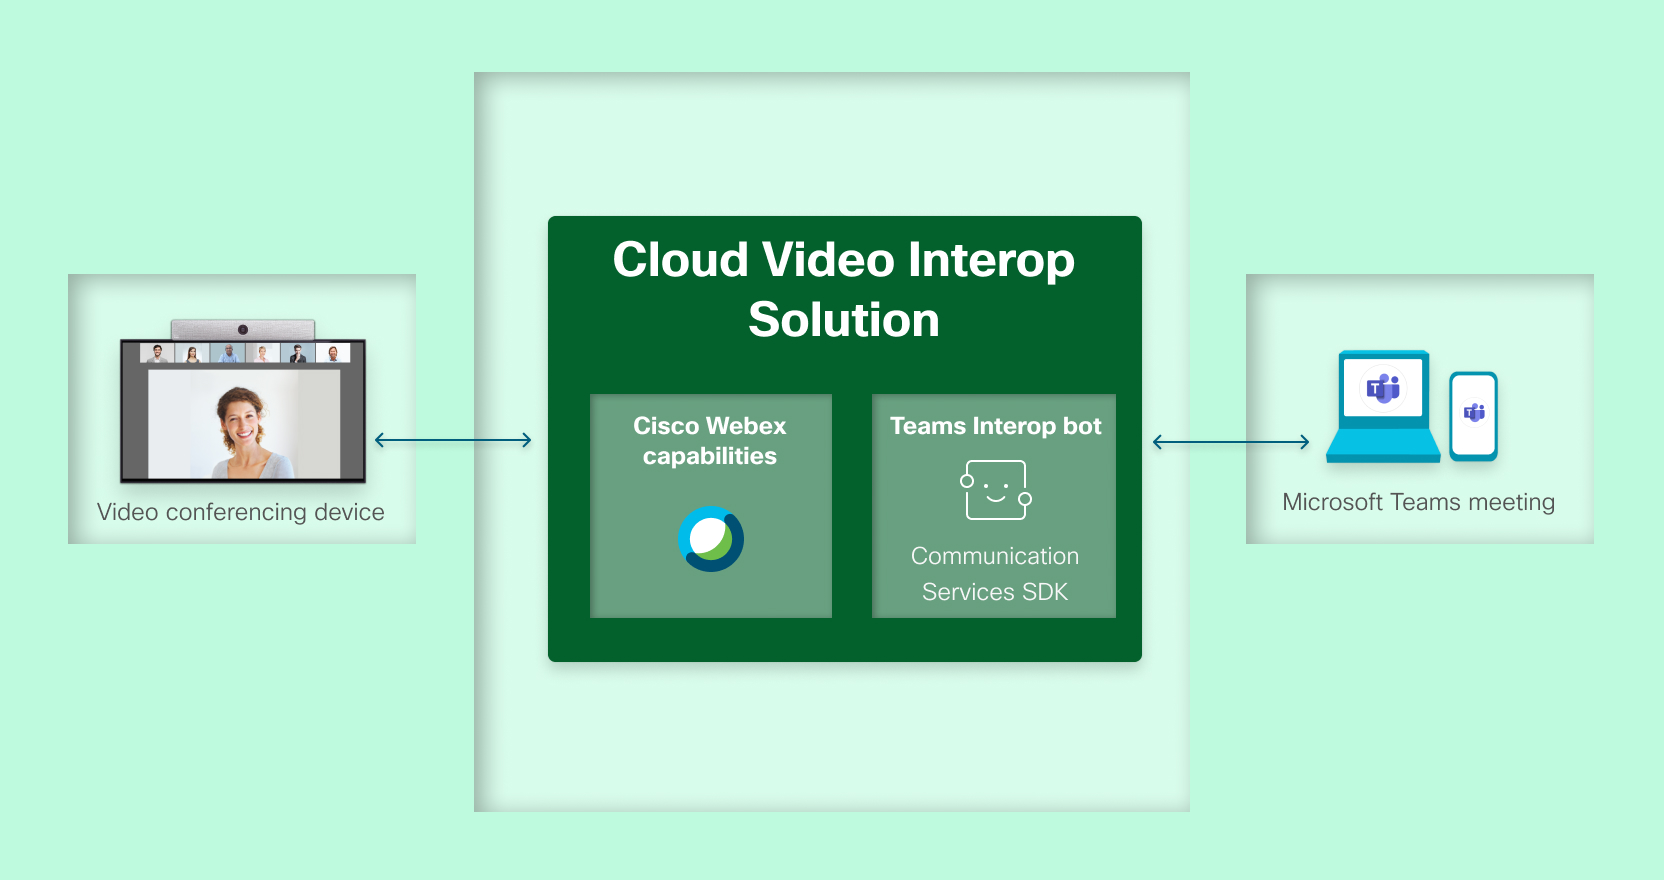 Immagine di architettura CVI basata su https://docs.microsoft.com/en-us/microsoftteams/cloud-video-interop